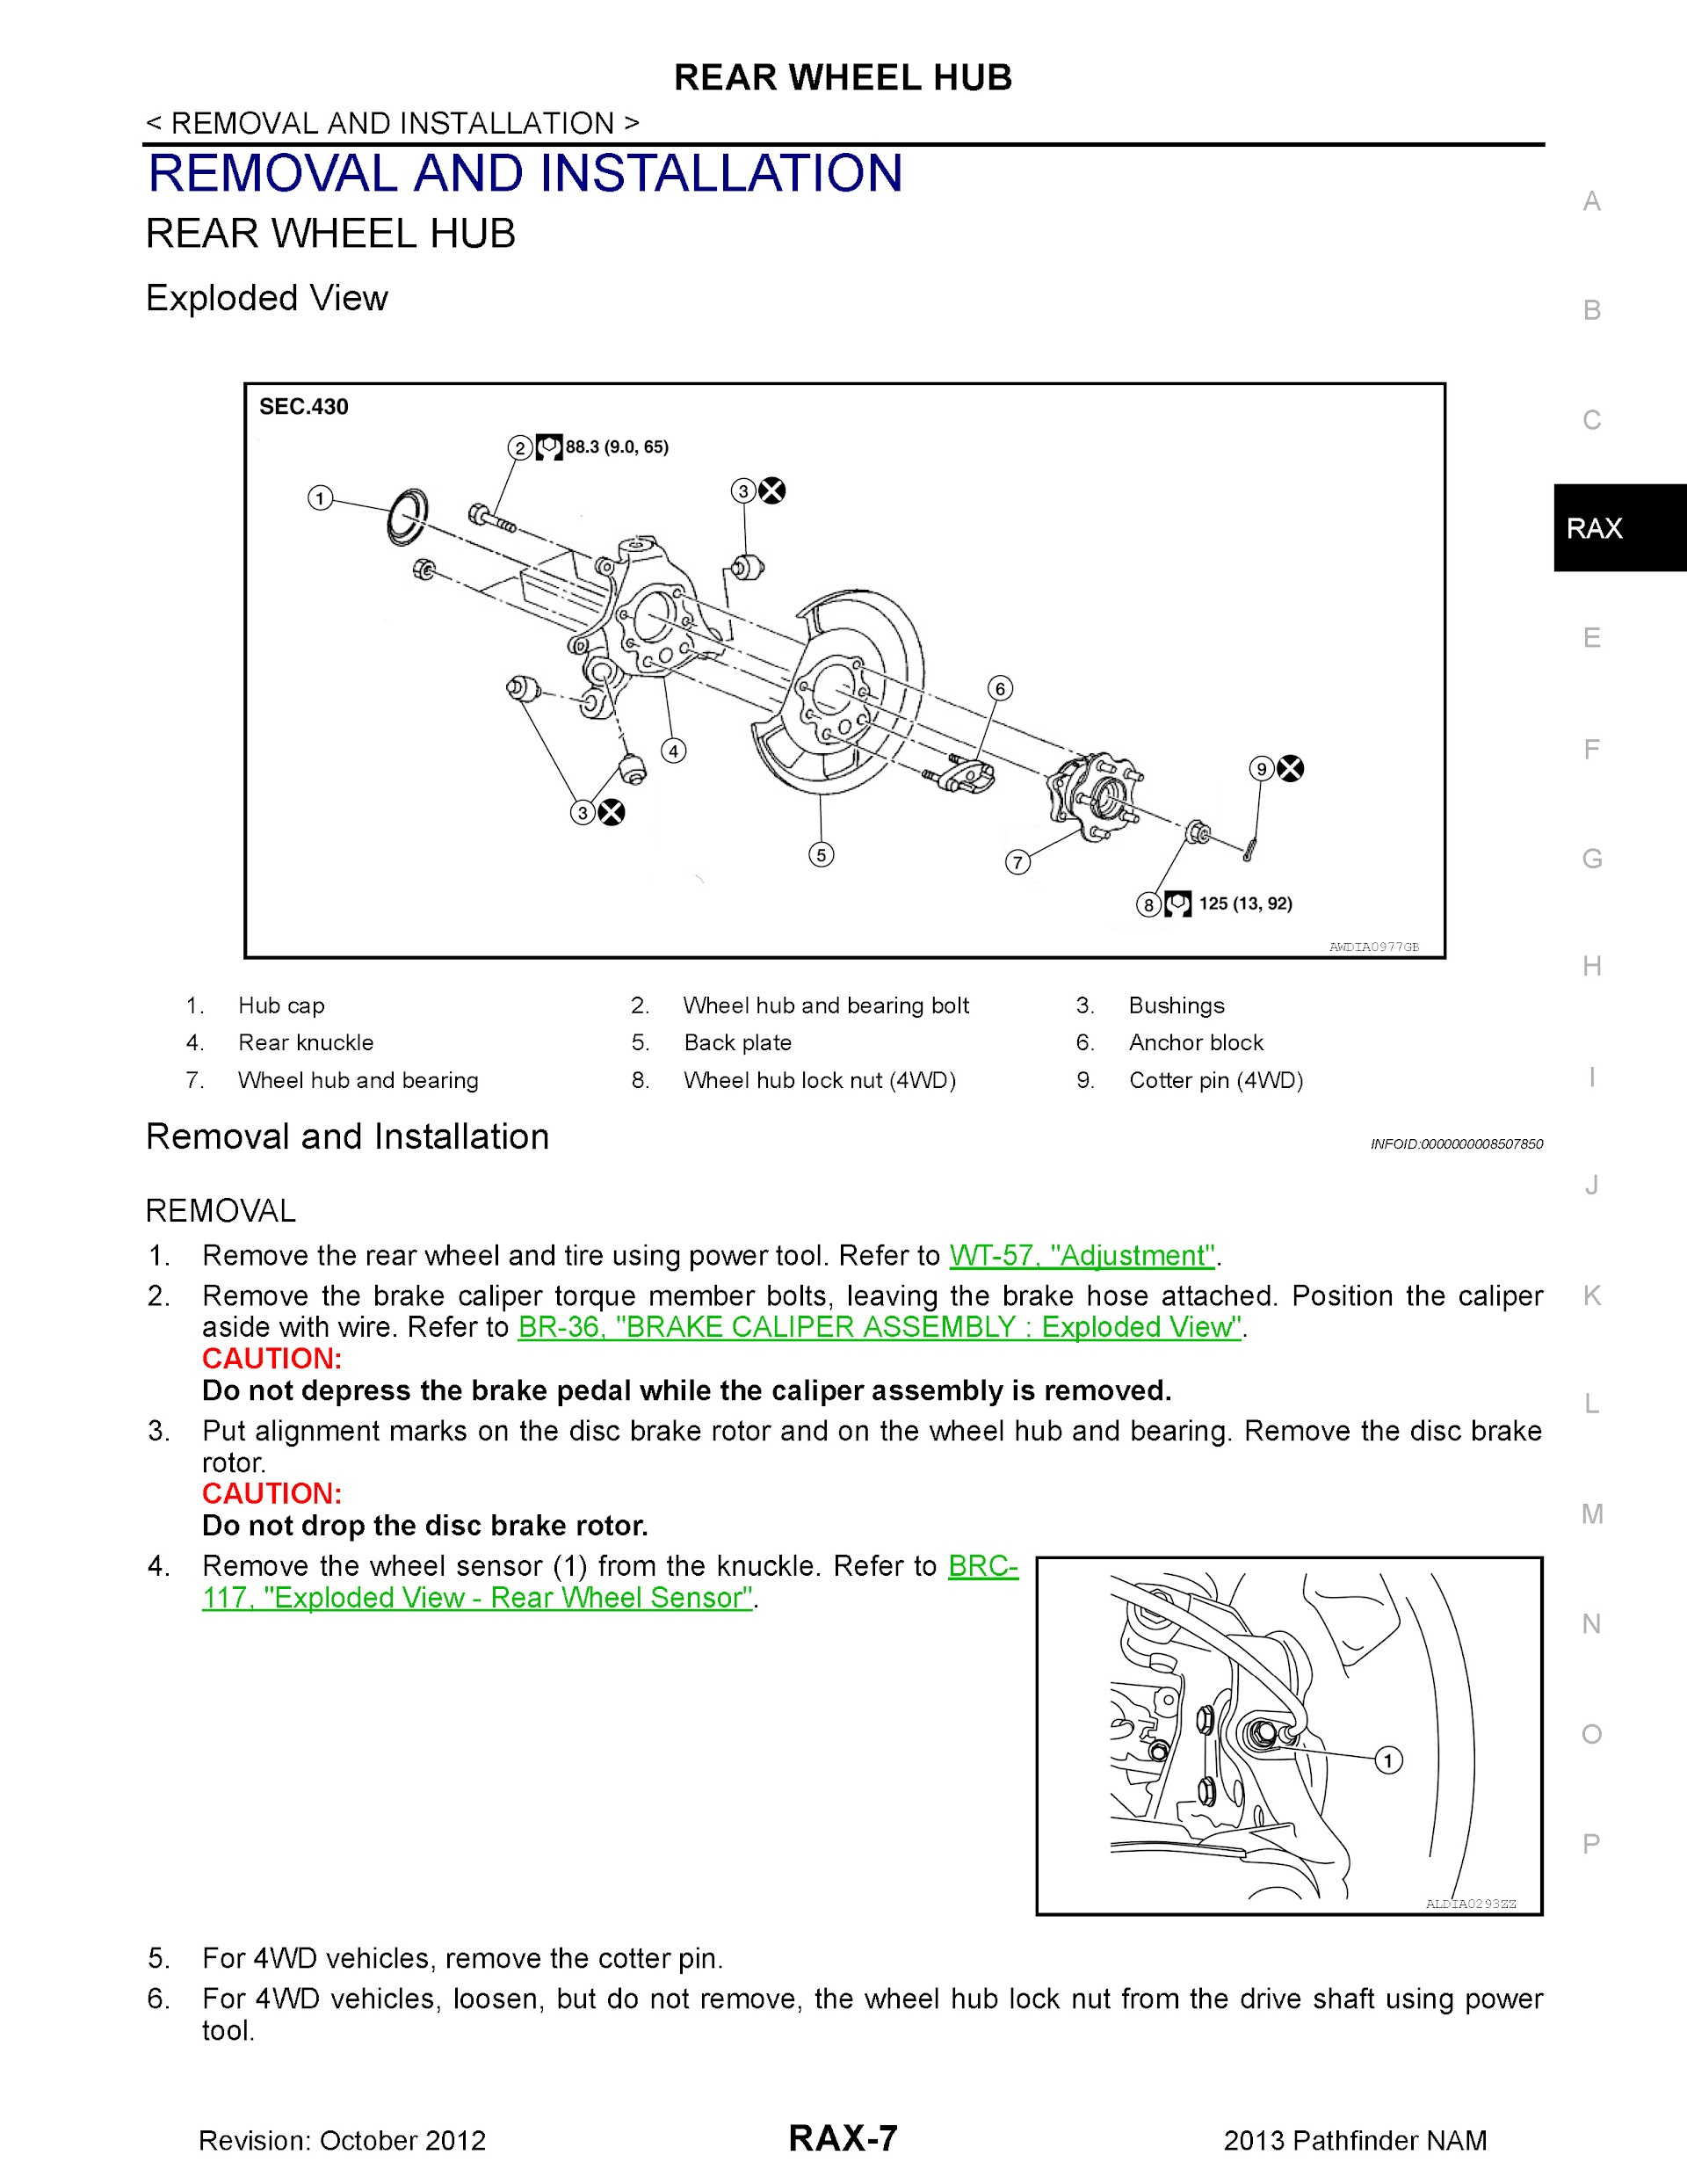 2013 Nissan Pathfinder Repair Manual, Rear Wheel Hub